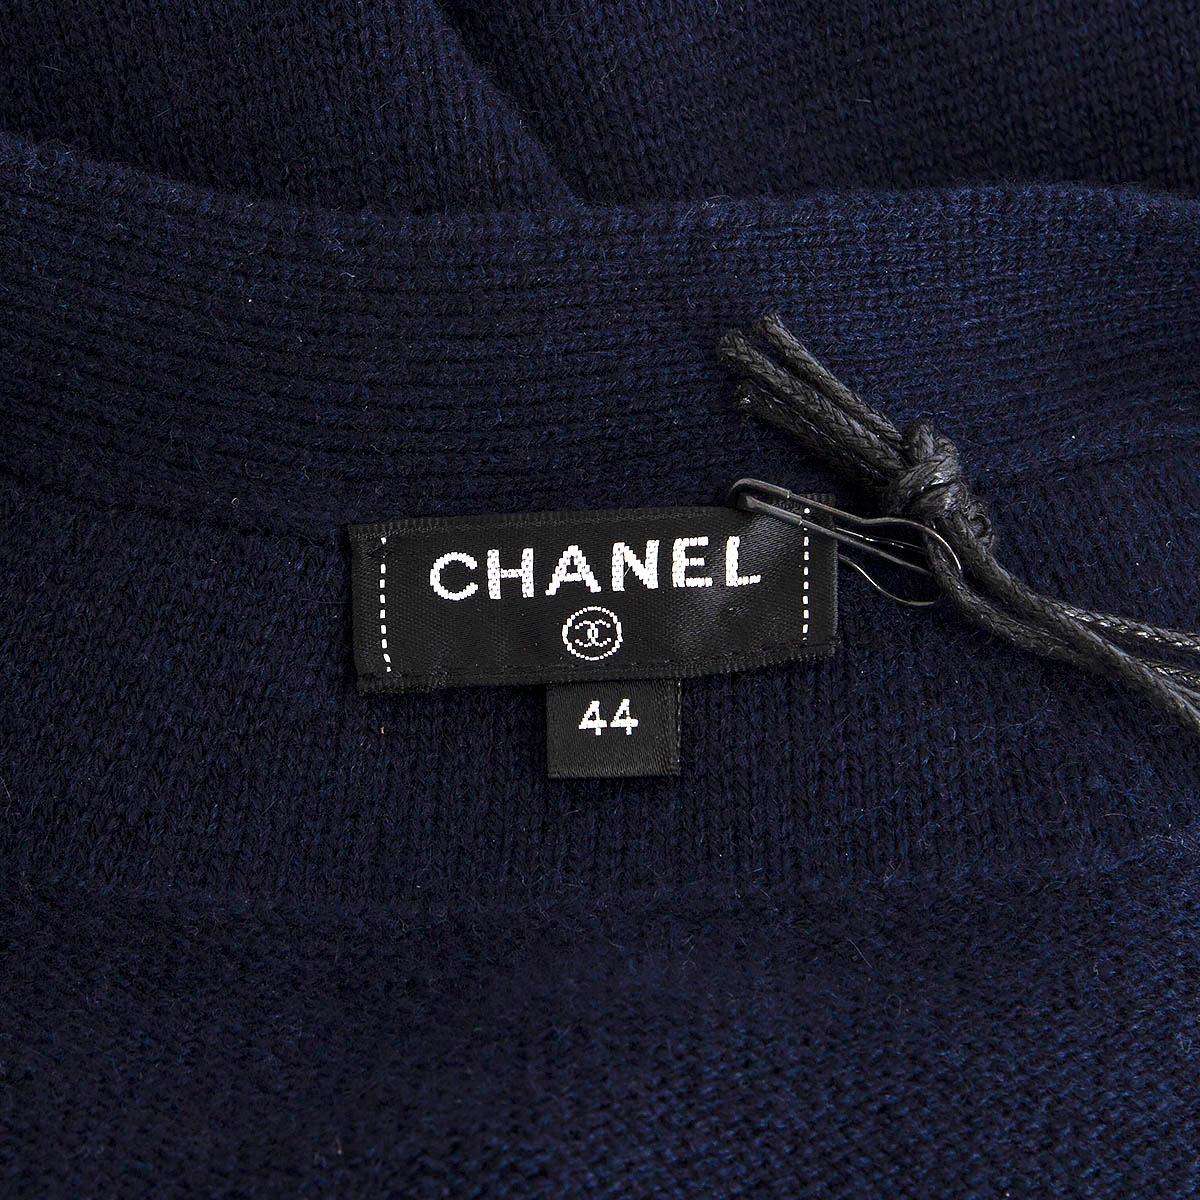 Women's CHANEL blue & white cashmere 2021 Cardigan Sweater 44 XL 21P